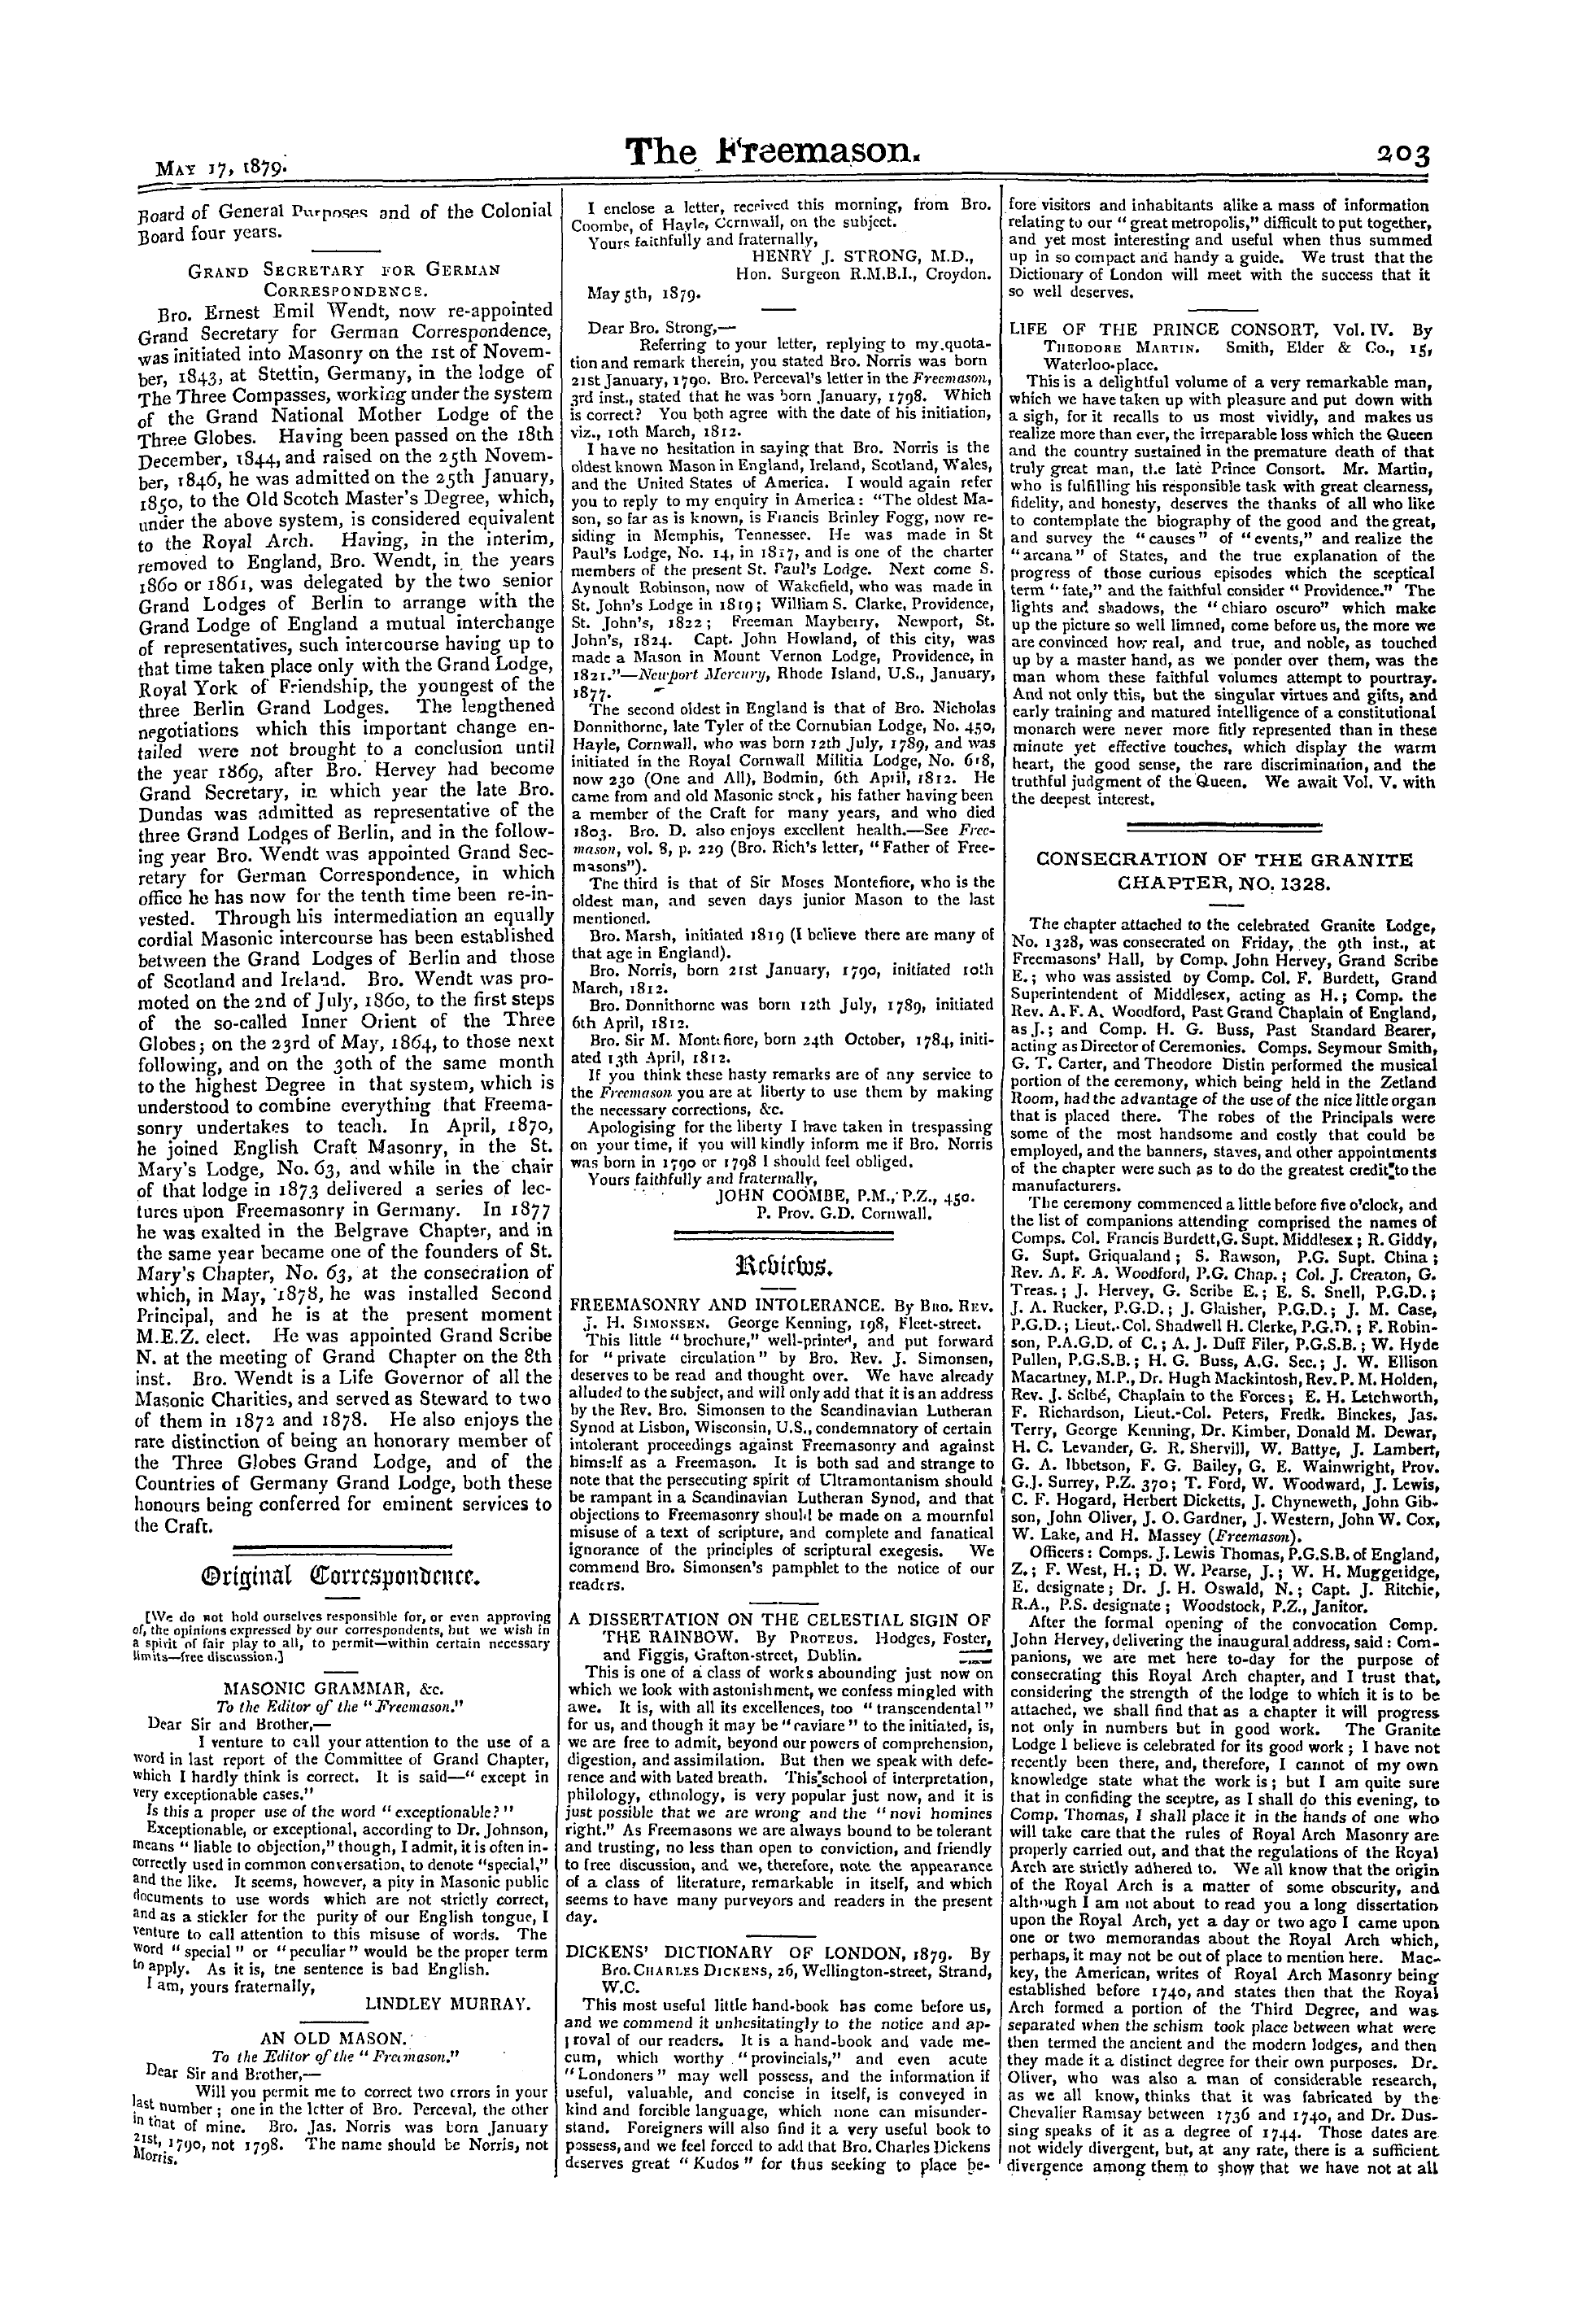 The Freemason: 1879-05-17 - Reviews.